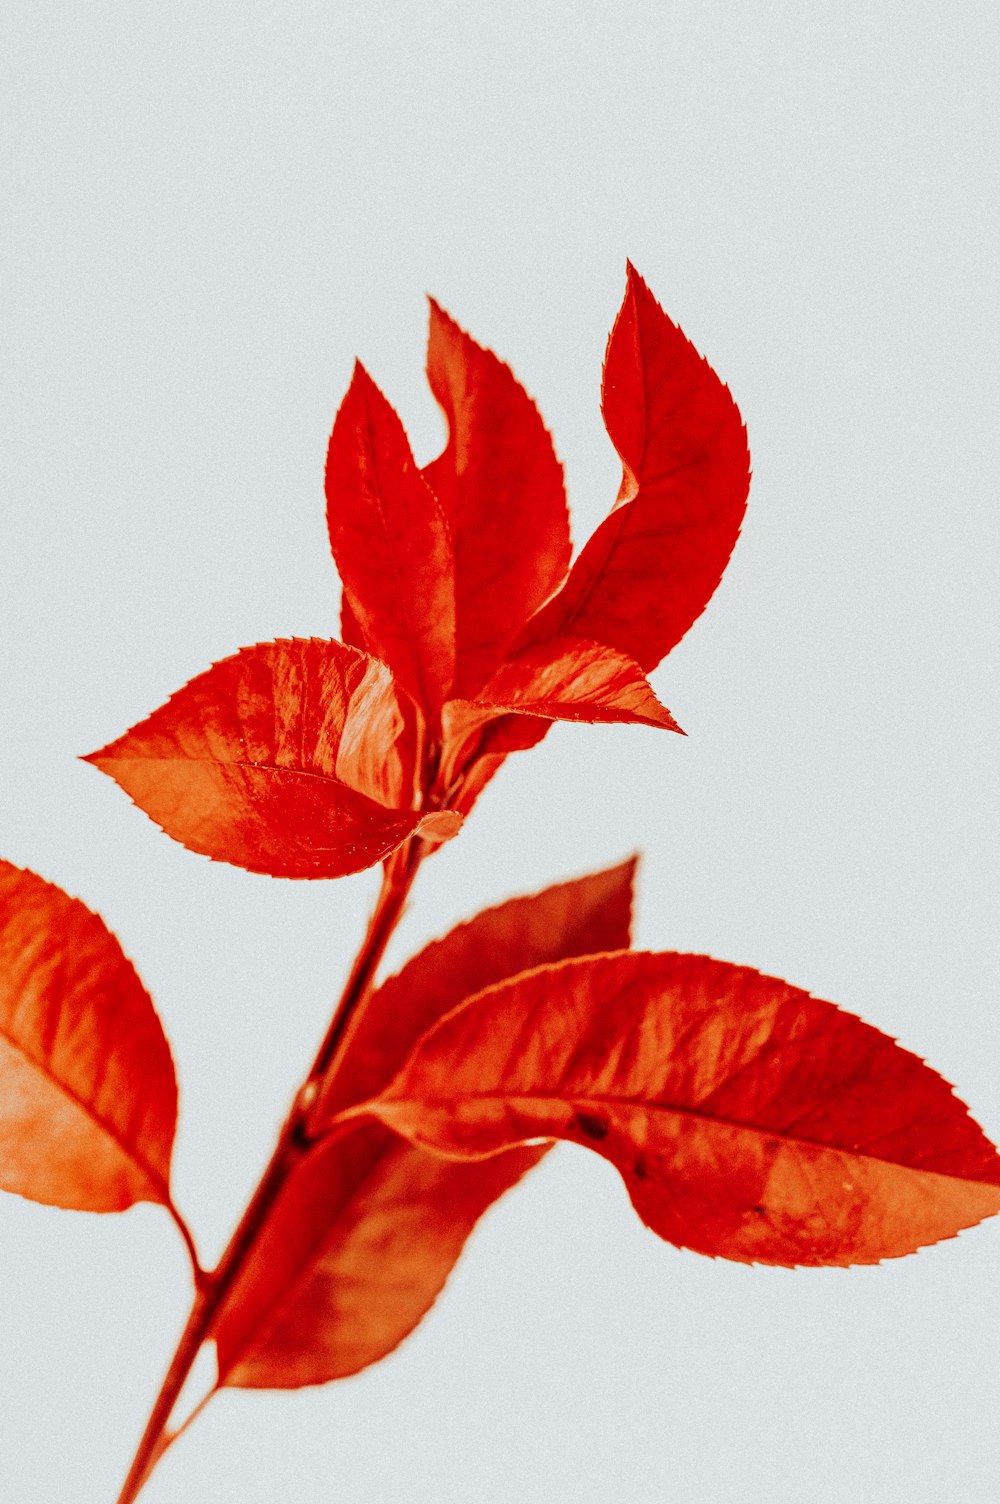 Red Leaves On White Background Photo Free Leaf Image On Unsplash